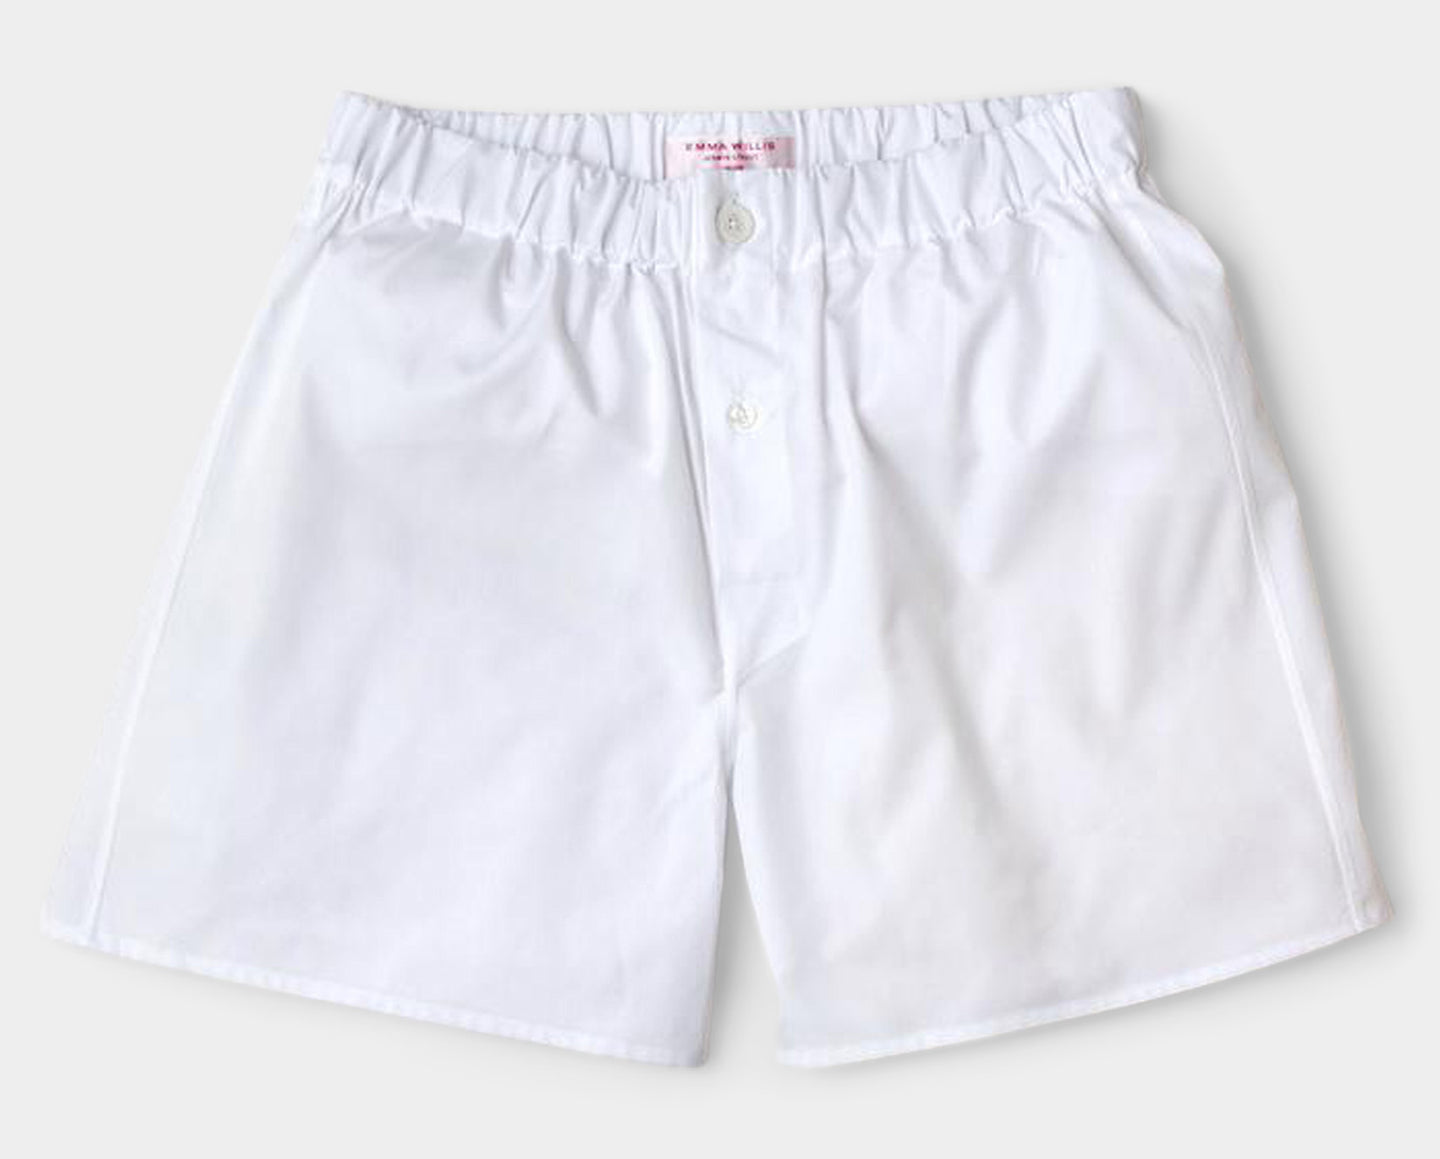 White Superior Cotton Boxer Shorts - Slim Fit